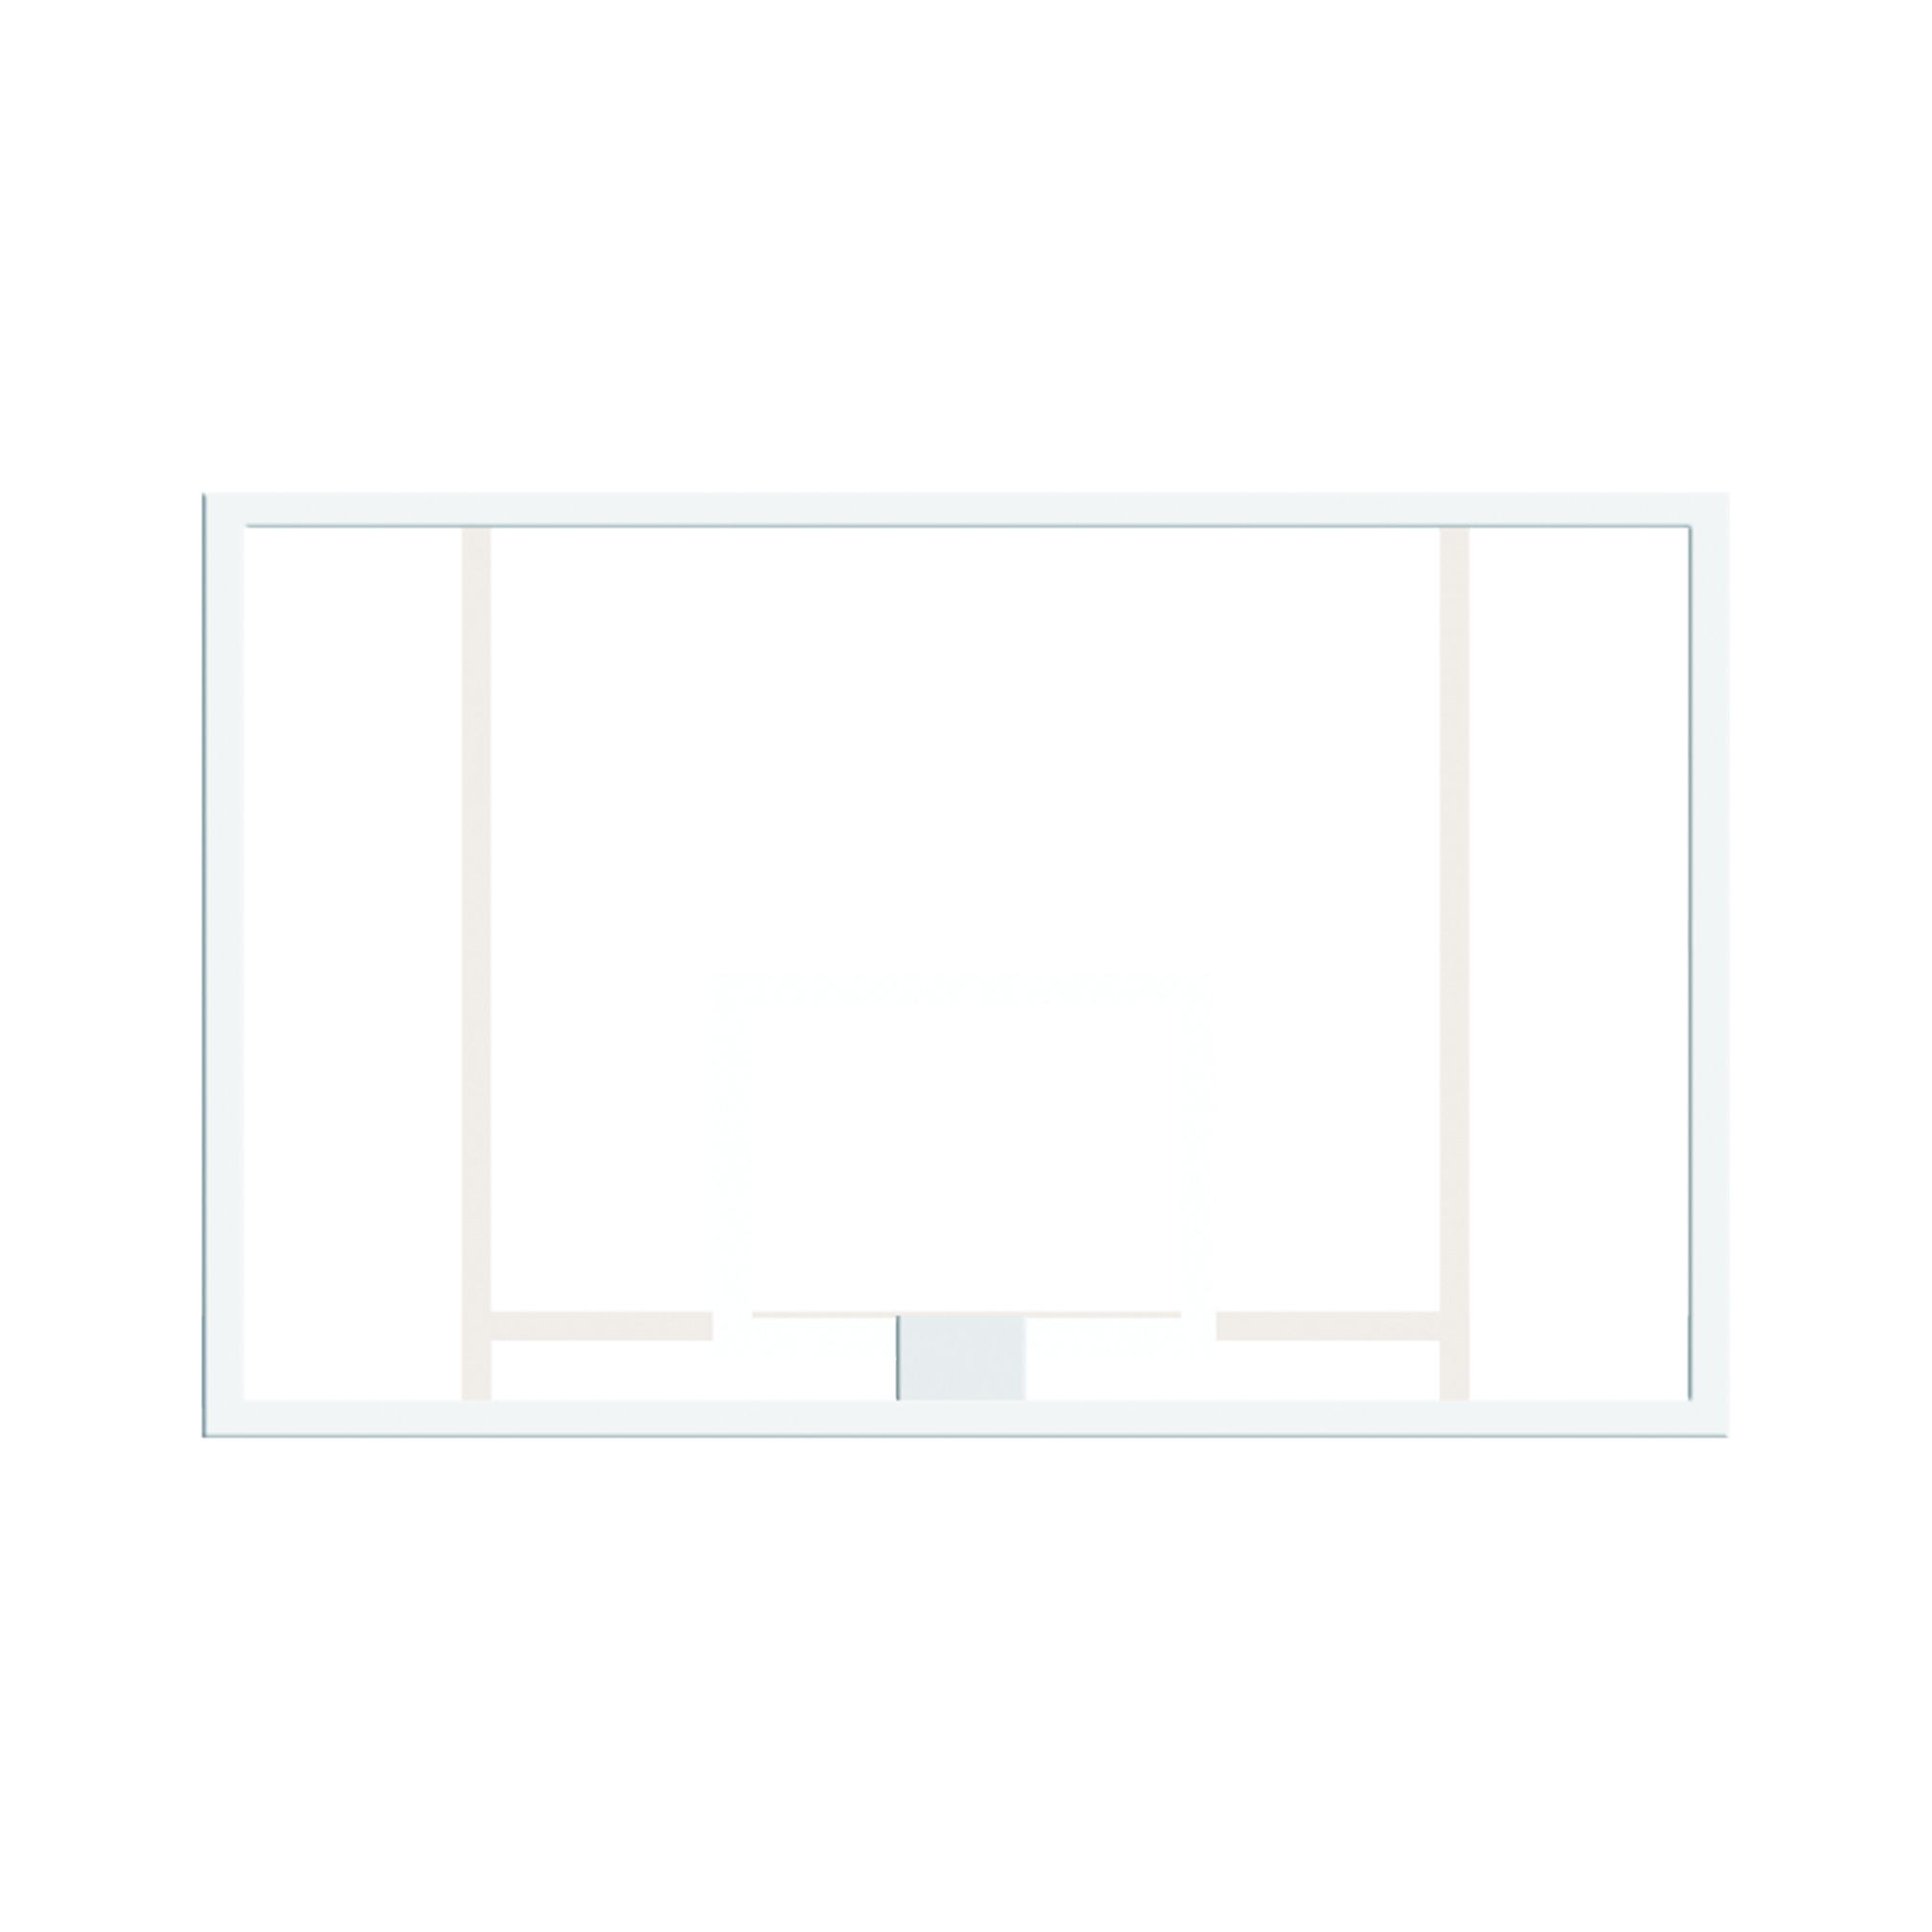 Basketbalbord 180x105 cm, acryl